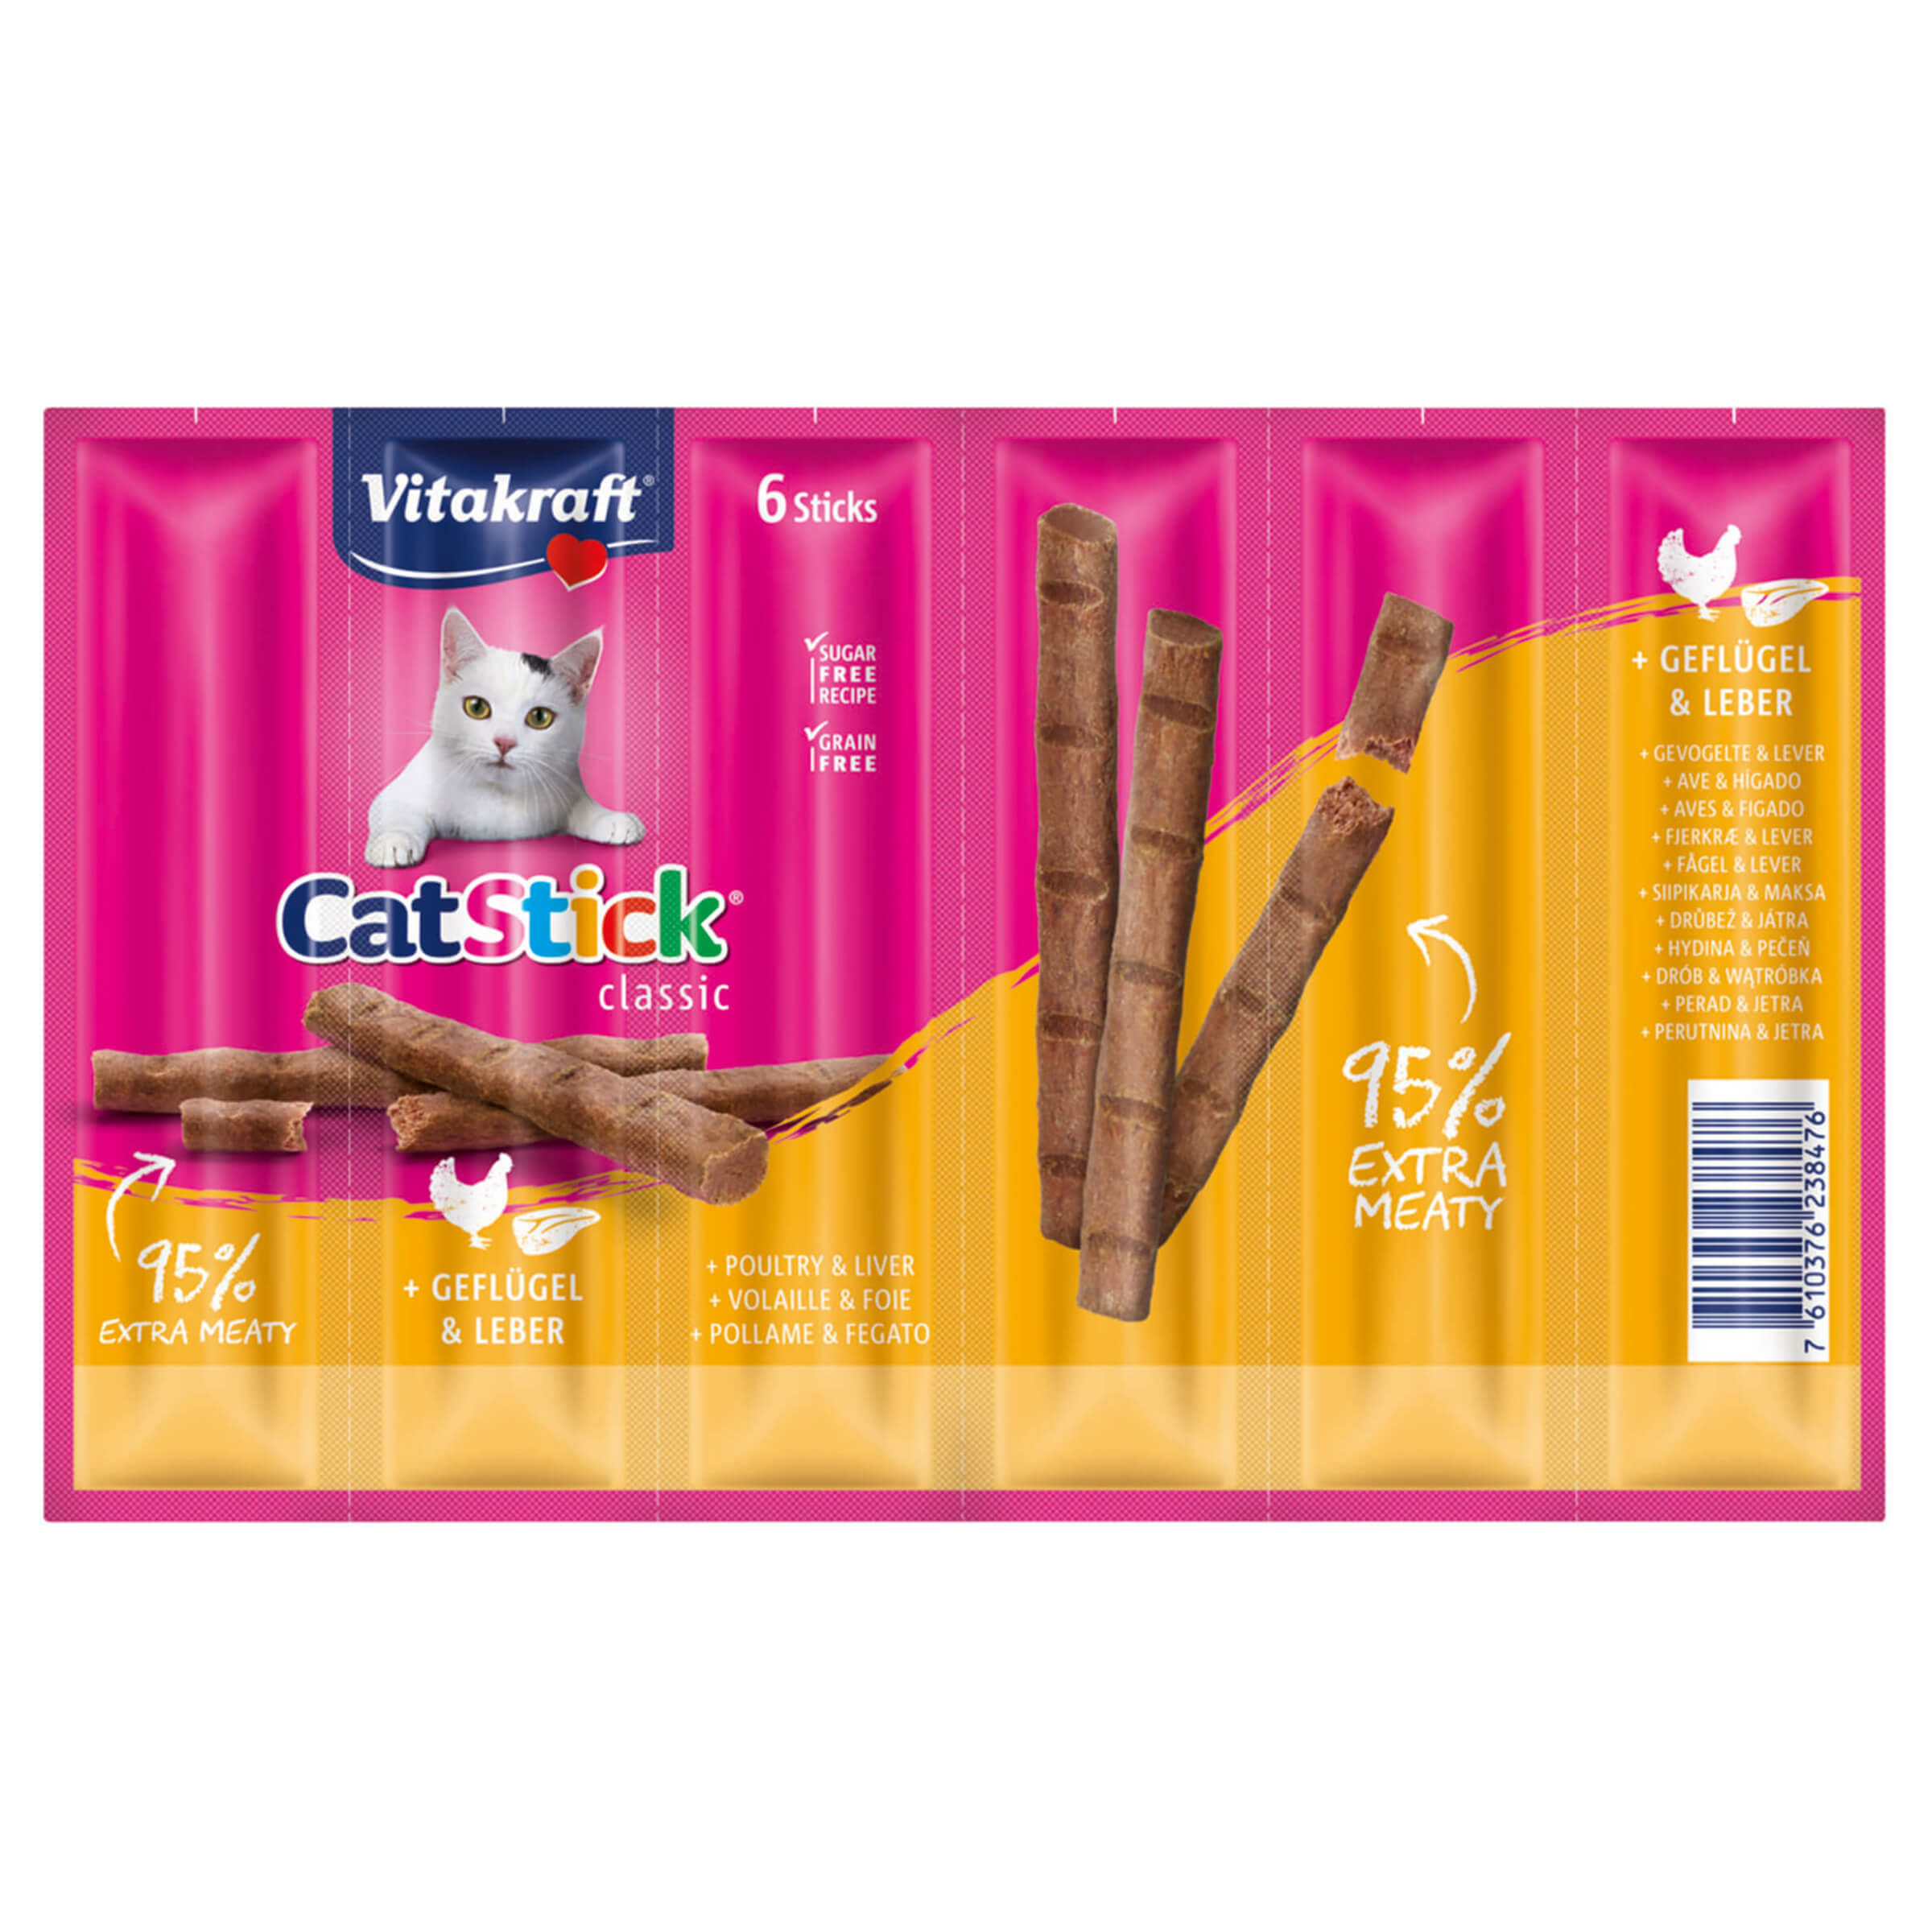 20 + 4 gratis! 24 x 6 g Vitakraft Cat Stick - Classic: Geflügel & Leber